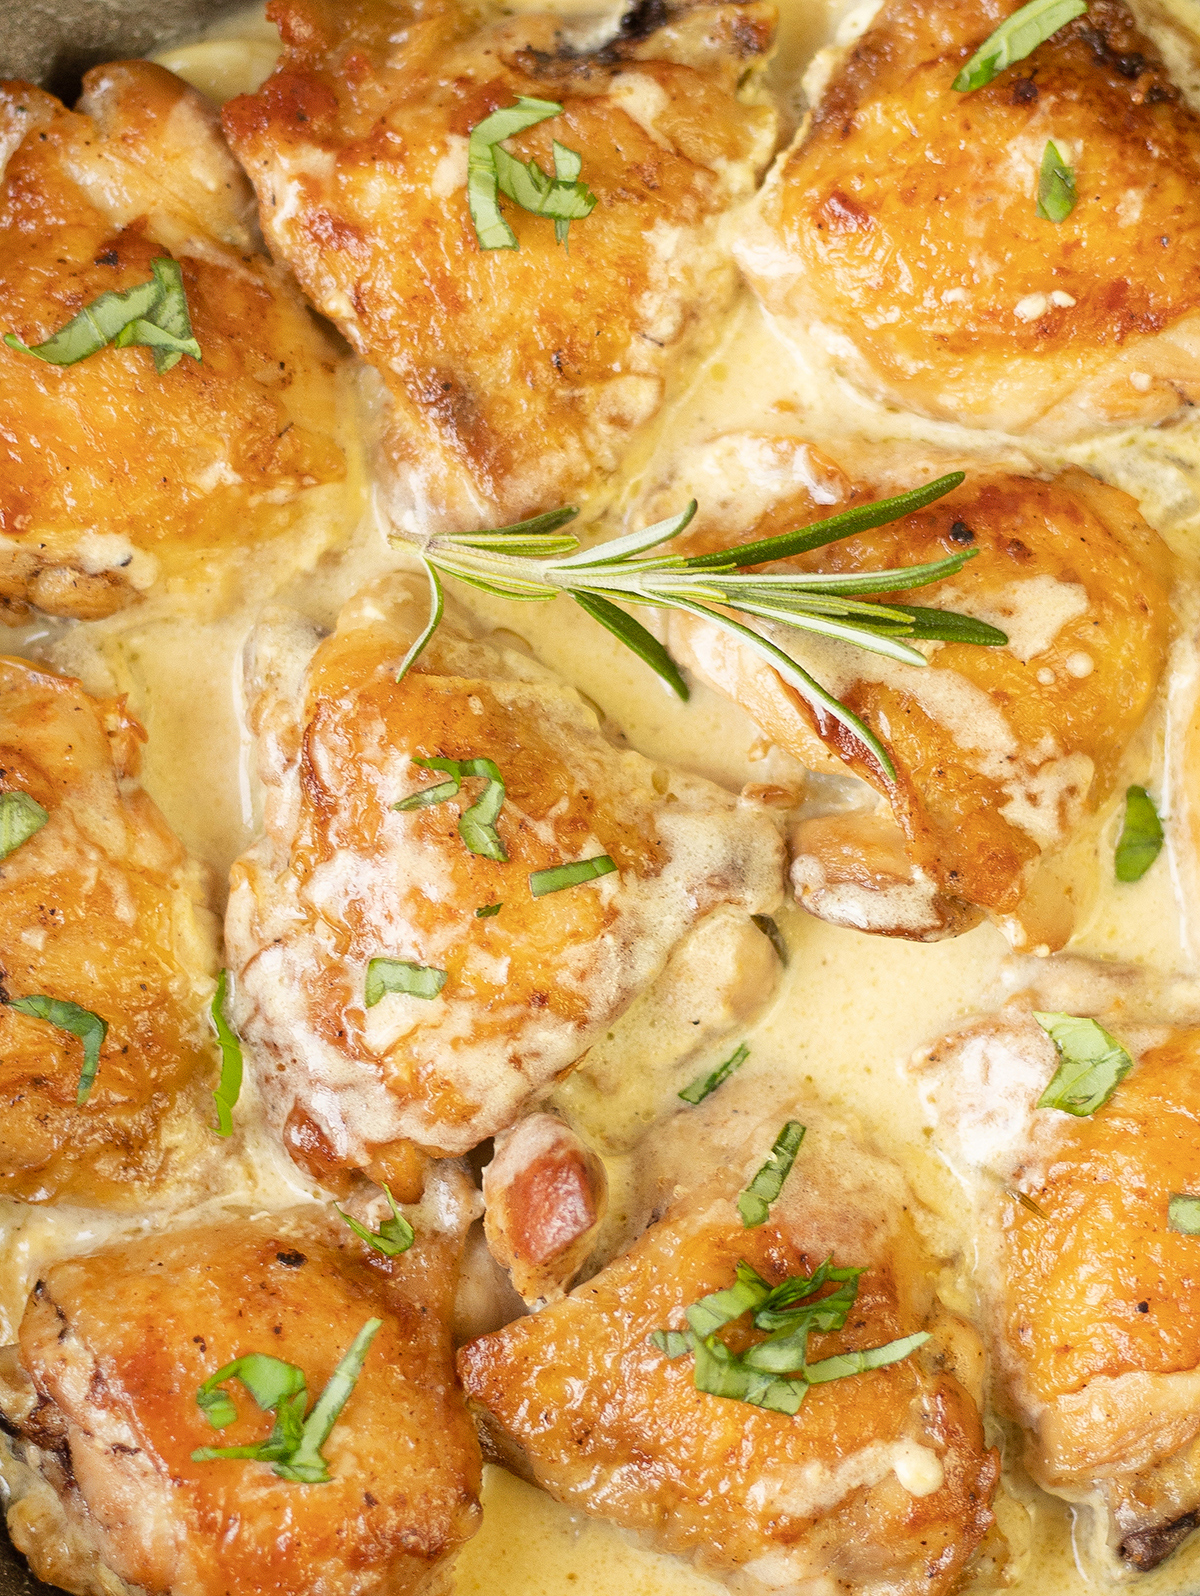 Creamy garlic chicken is a one-pot recipe